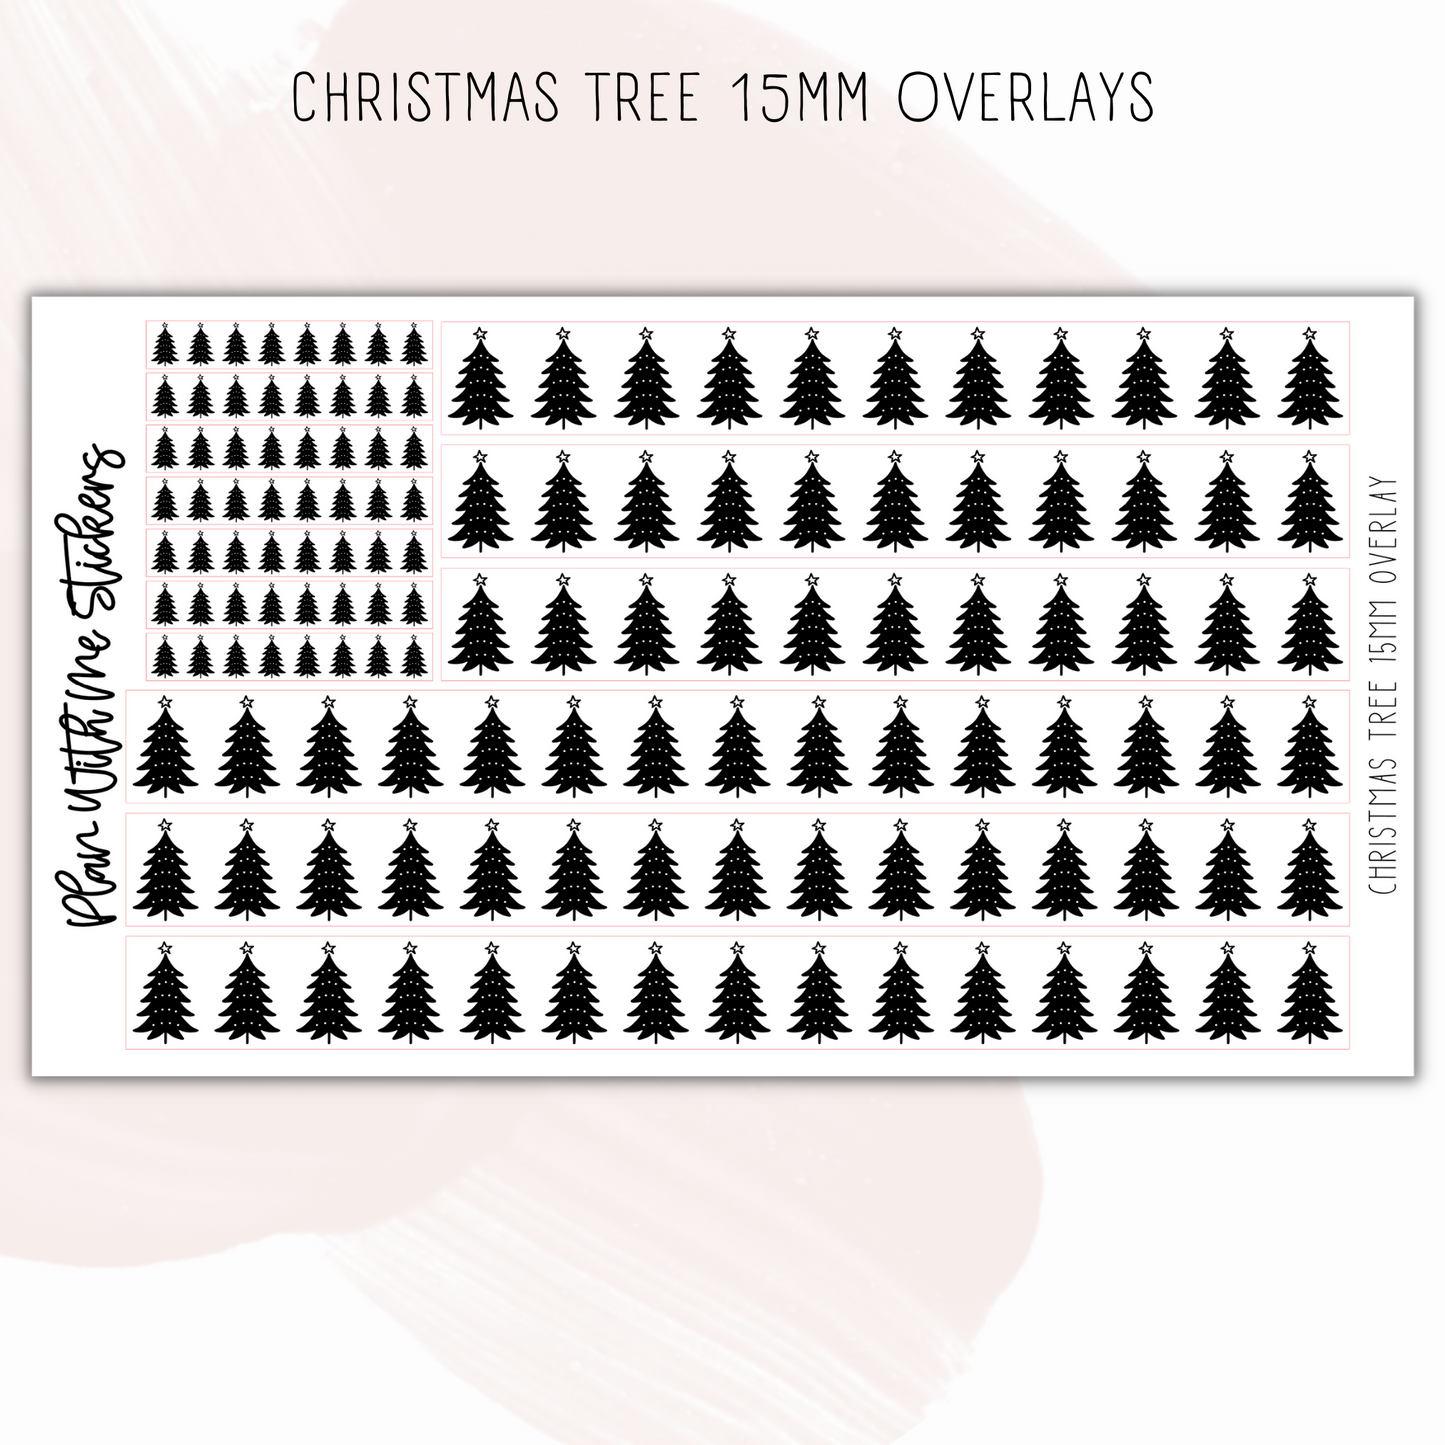 Christmas Tree 15mm Overlays